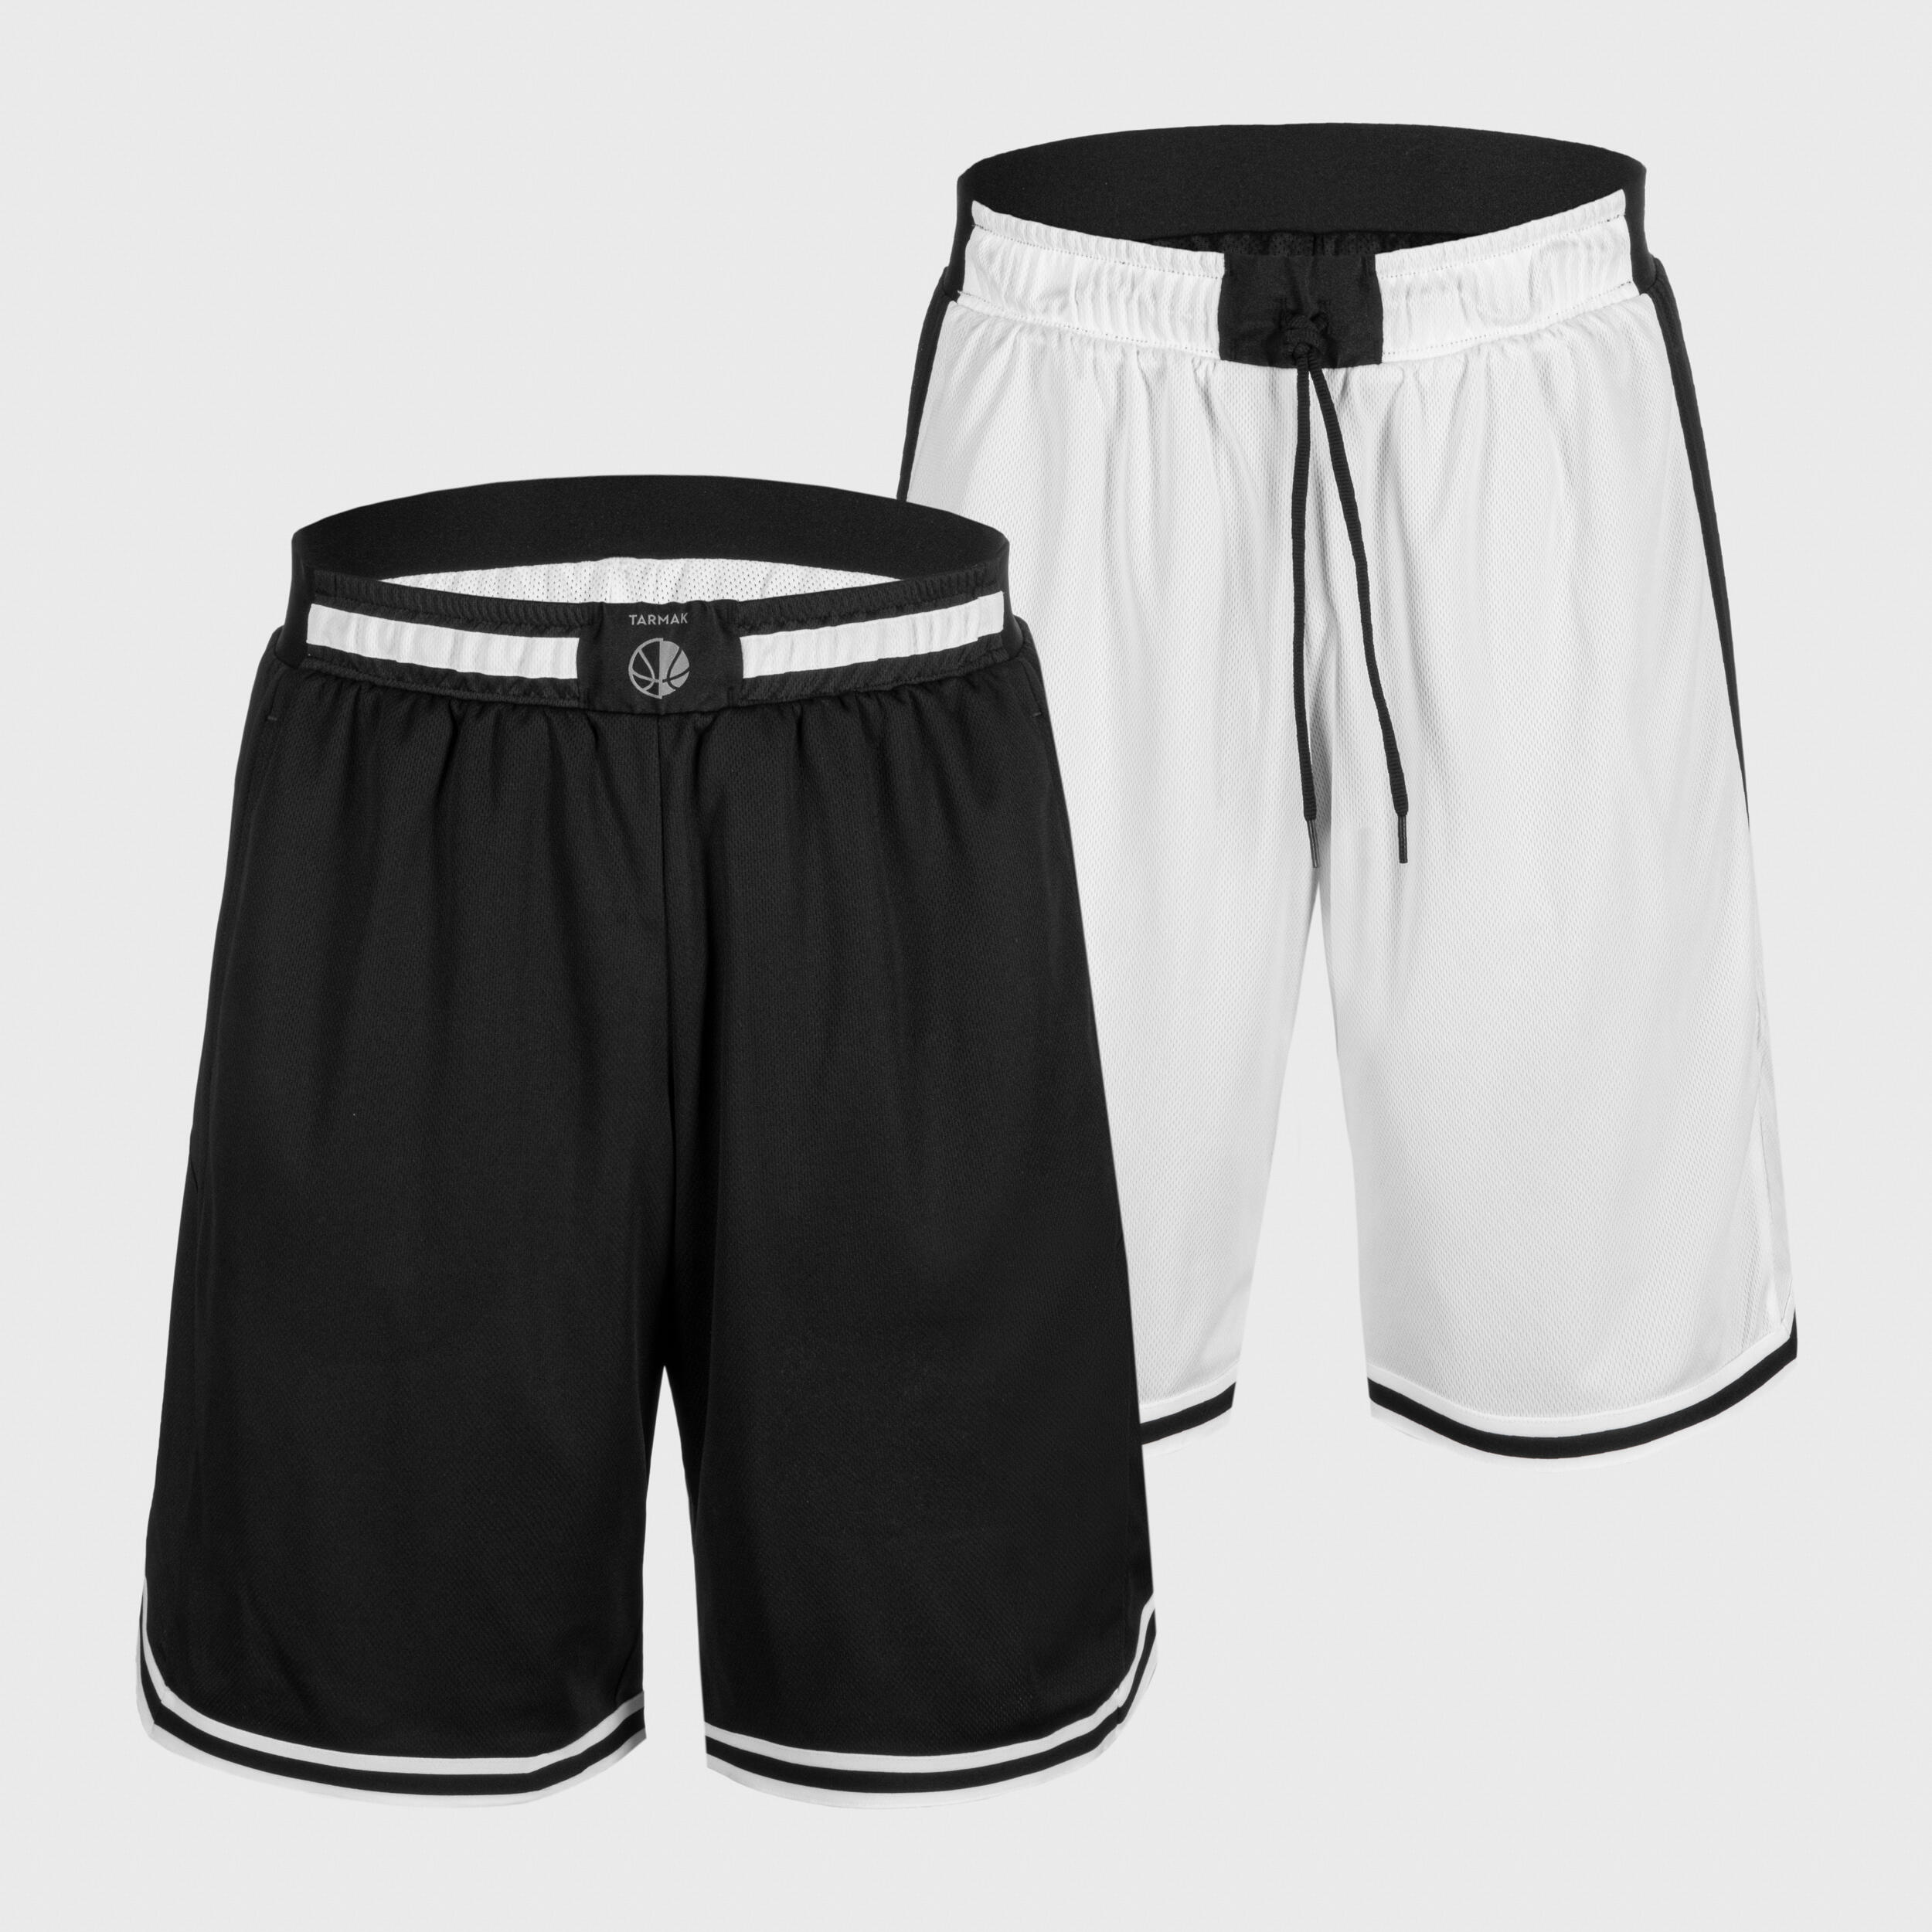 Adult 2-Way Basketball Shorts SH500R - Black/White 5/9